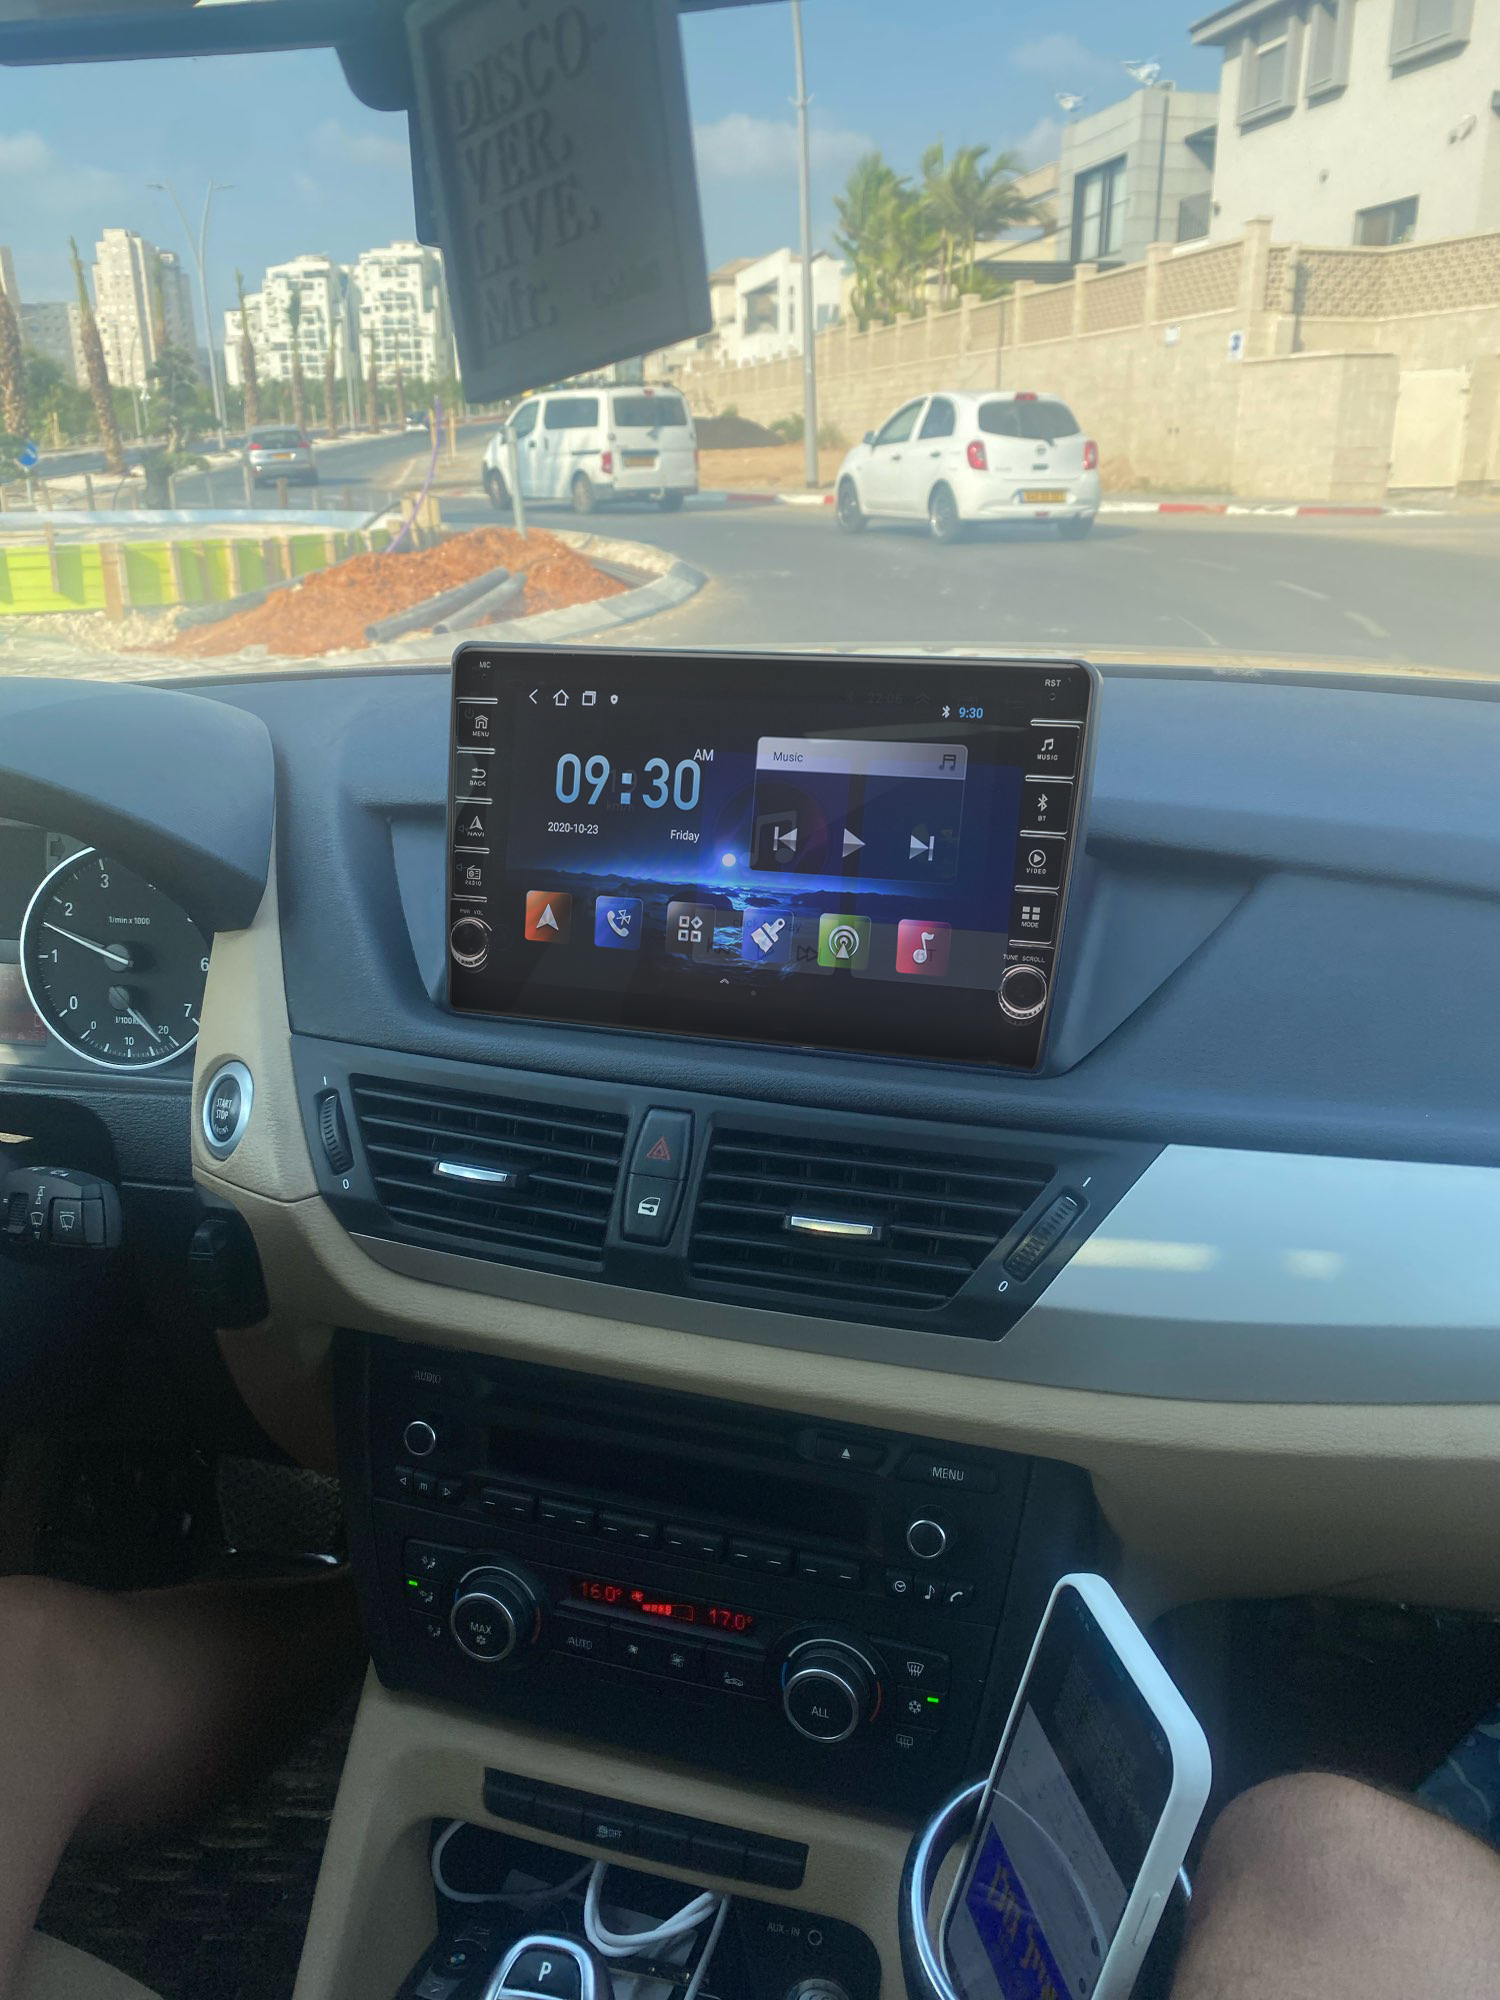 Navigatie AUTONAV Android GPS Dedicata BMW X1 E84, Model PRO Memorie 128GB Stocare, 6GB DDR3 RAM, Display 9" Full-Touch, WiFi, 2 x USB, Bluetooth, 4G, Octa-Core 8 * 1.3GHz, 4 * 50W Audio